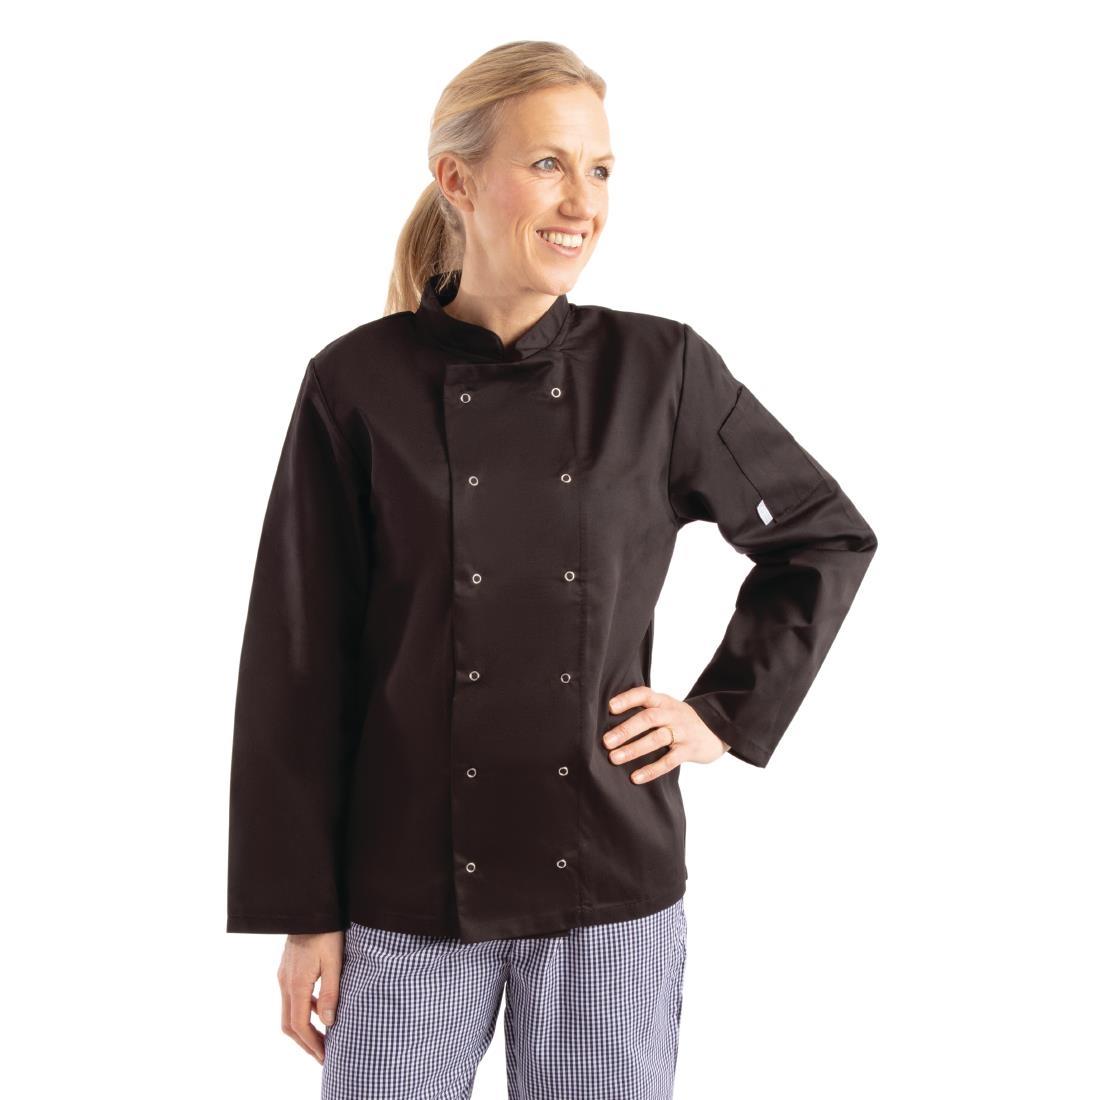 Whites Vegas Unisex Chefs Jacket Long Sleeve Black L - A438-L  - 11